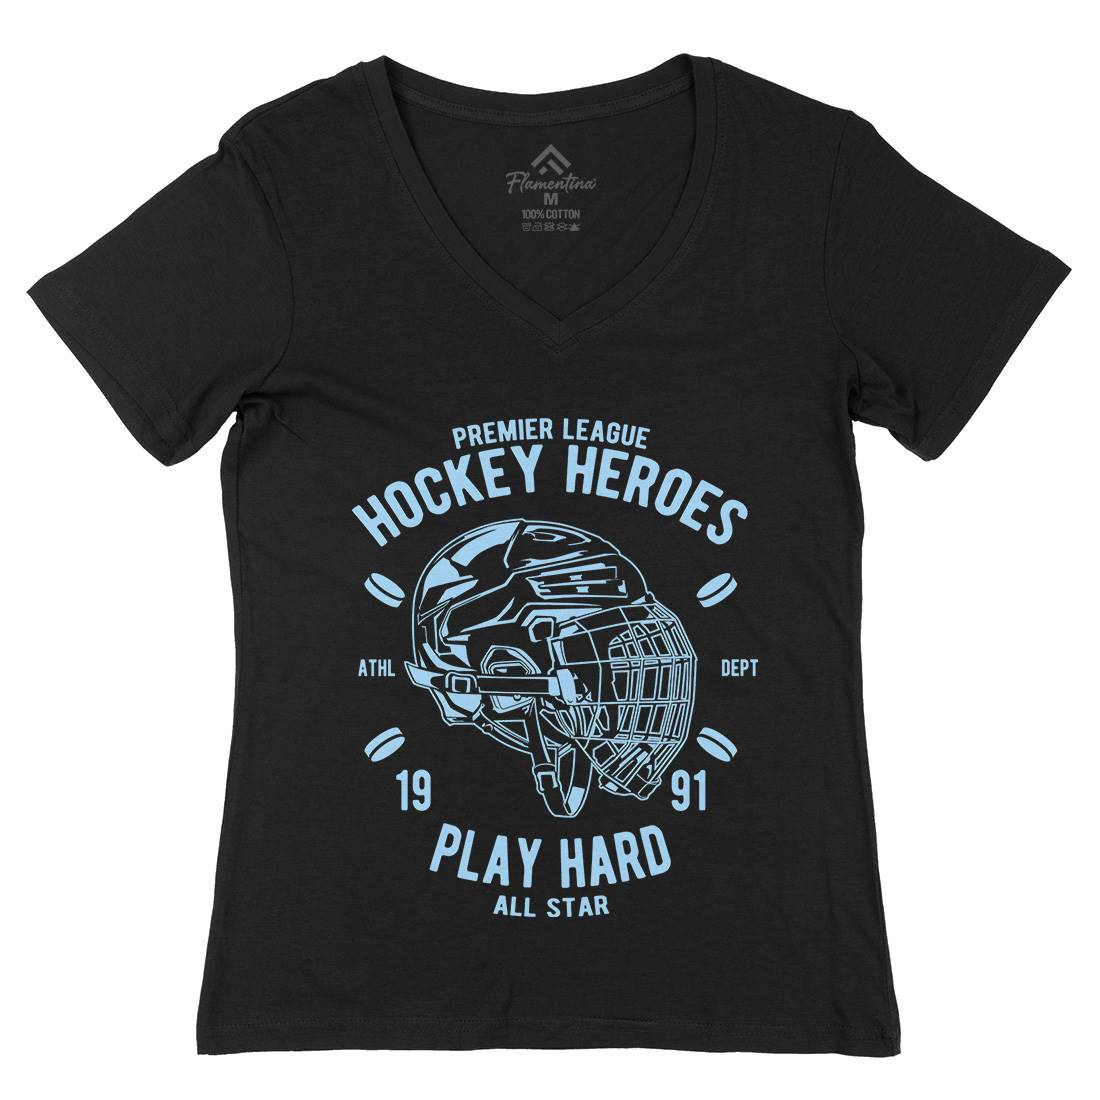 Hockey Heroes Womens Organic V-Neck T-Shirt Sport A064